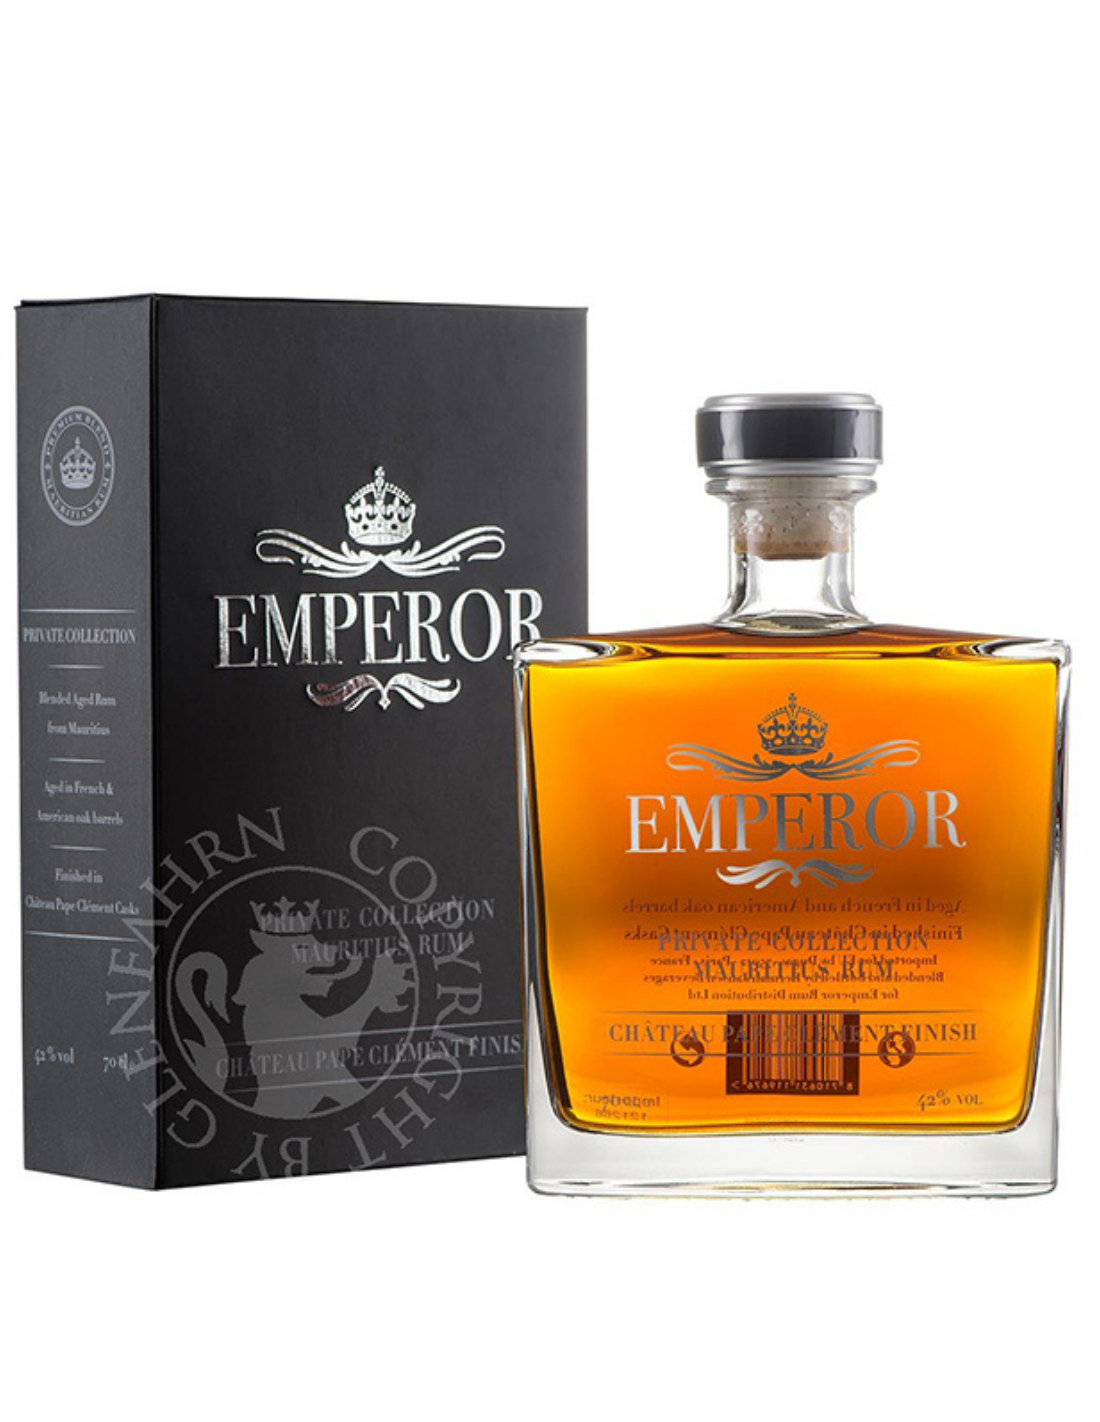 Rom Emperor Private Collection, 42% alc., 0.7L, Mauritius alcooldiscount.ro